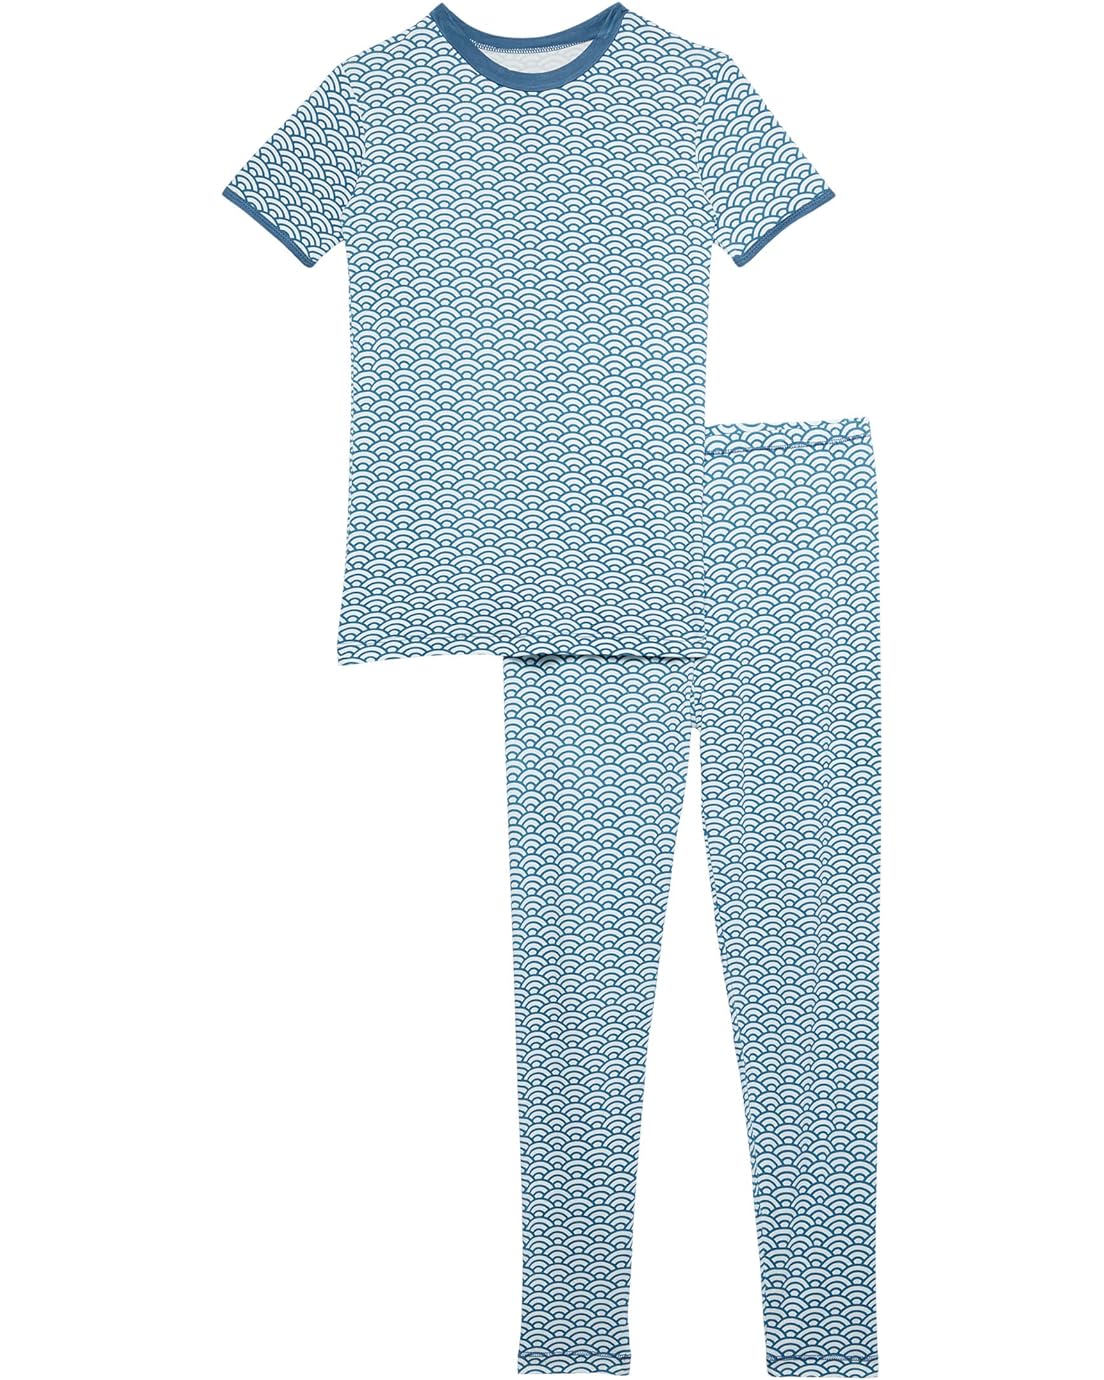 Kickee Pants Kids Short Sleeve Pajama Set (Big Kids)